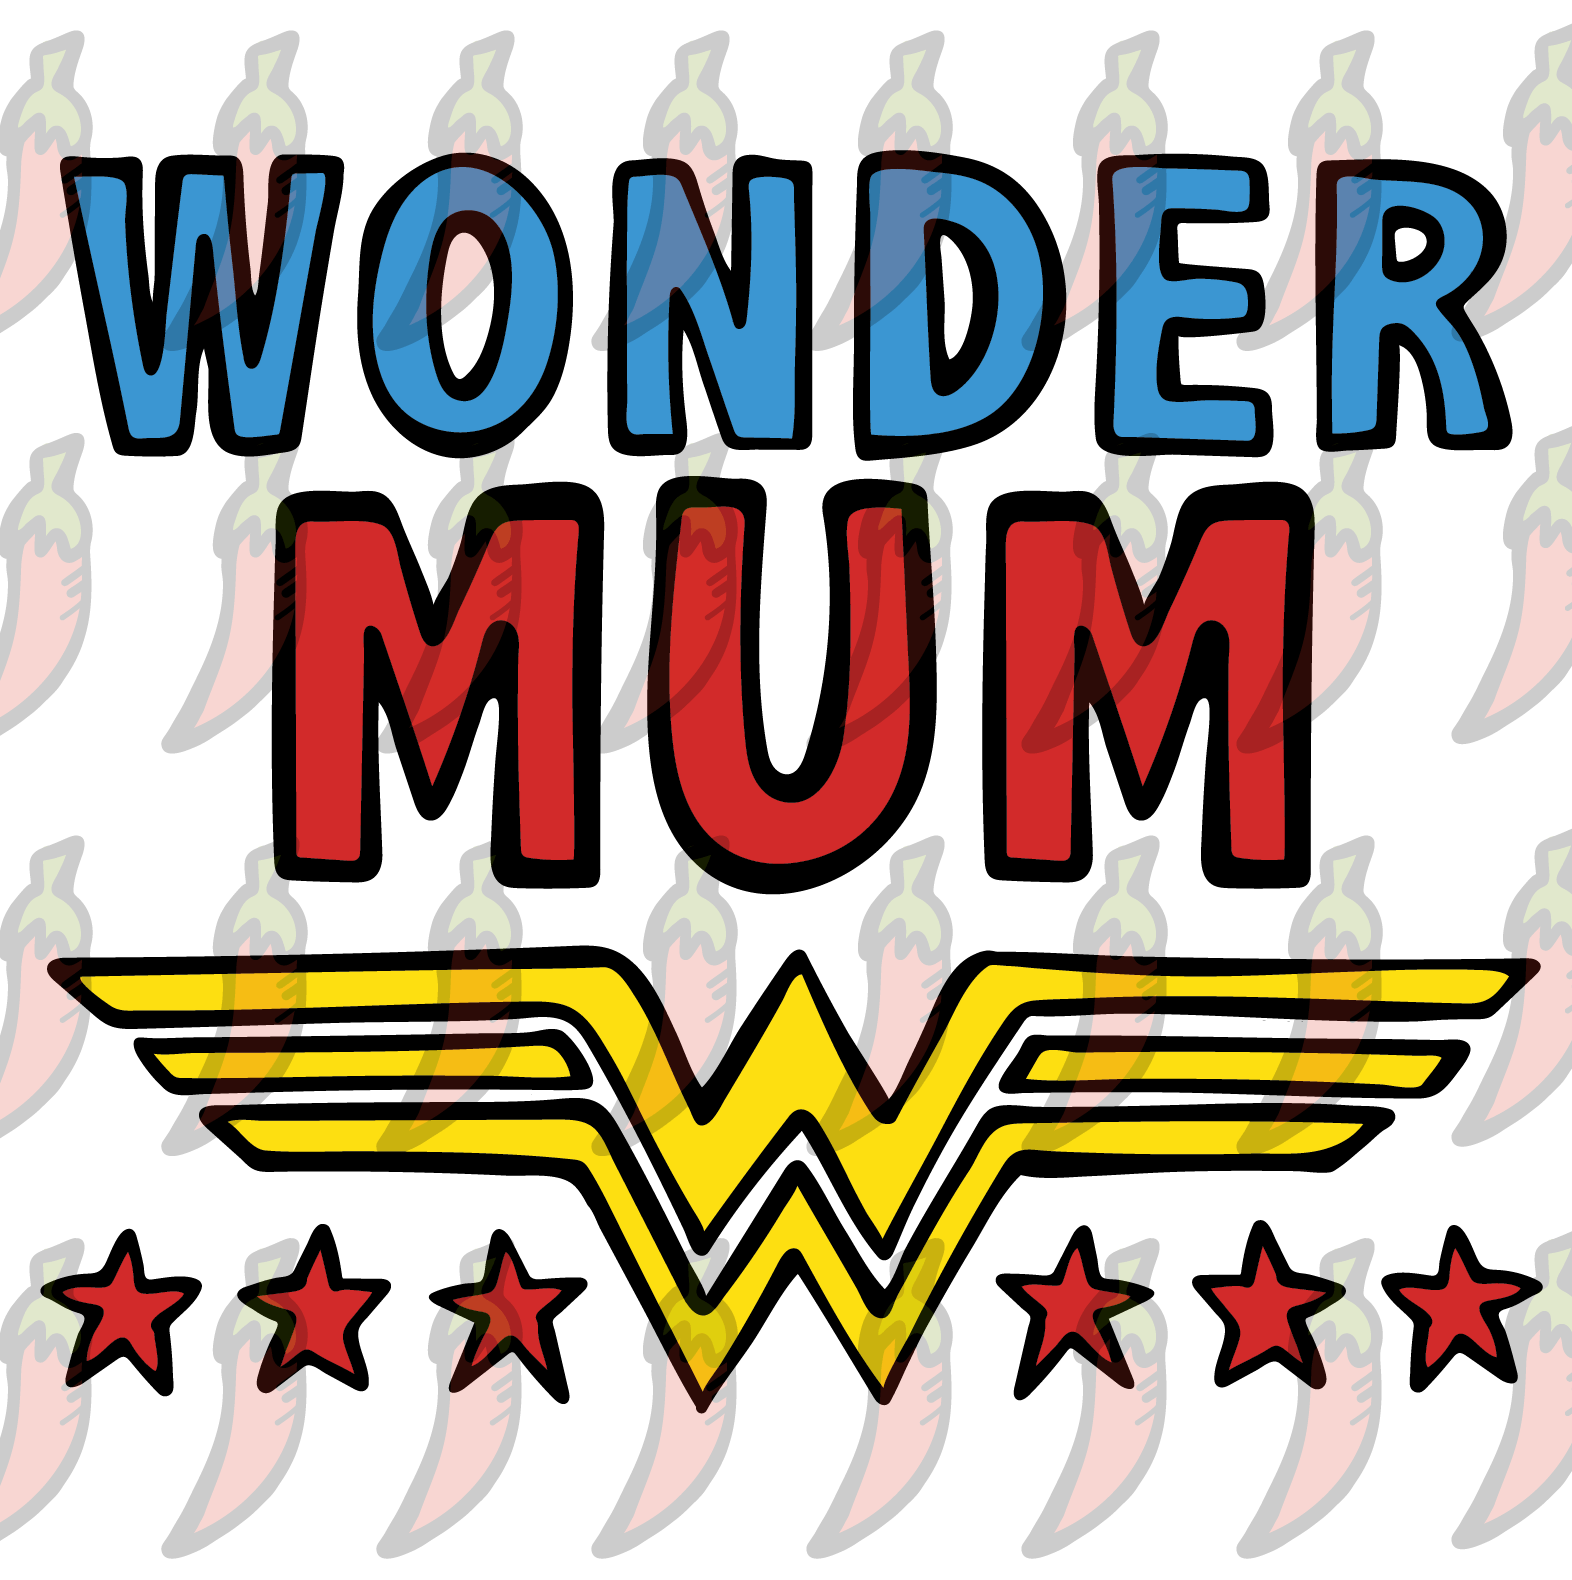 Wondermum 🦸‍♀️ - Men's (Unisex) T Shirt